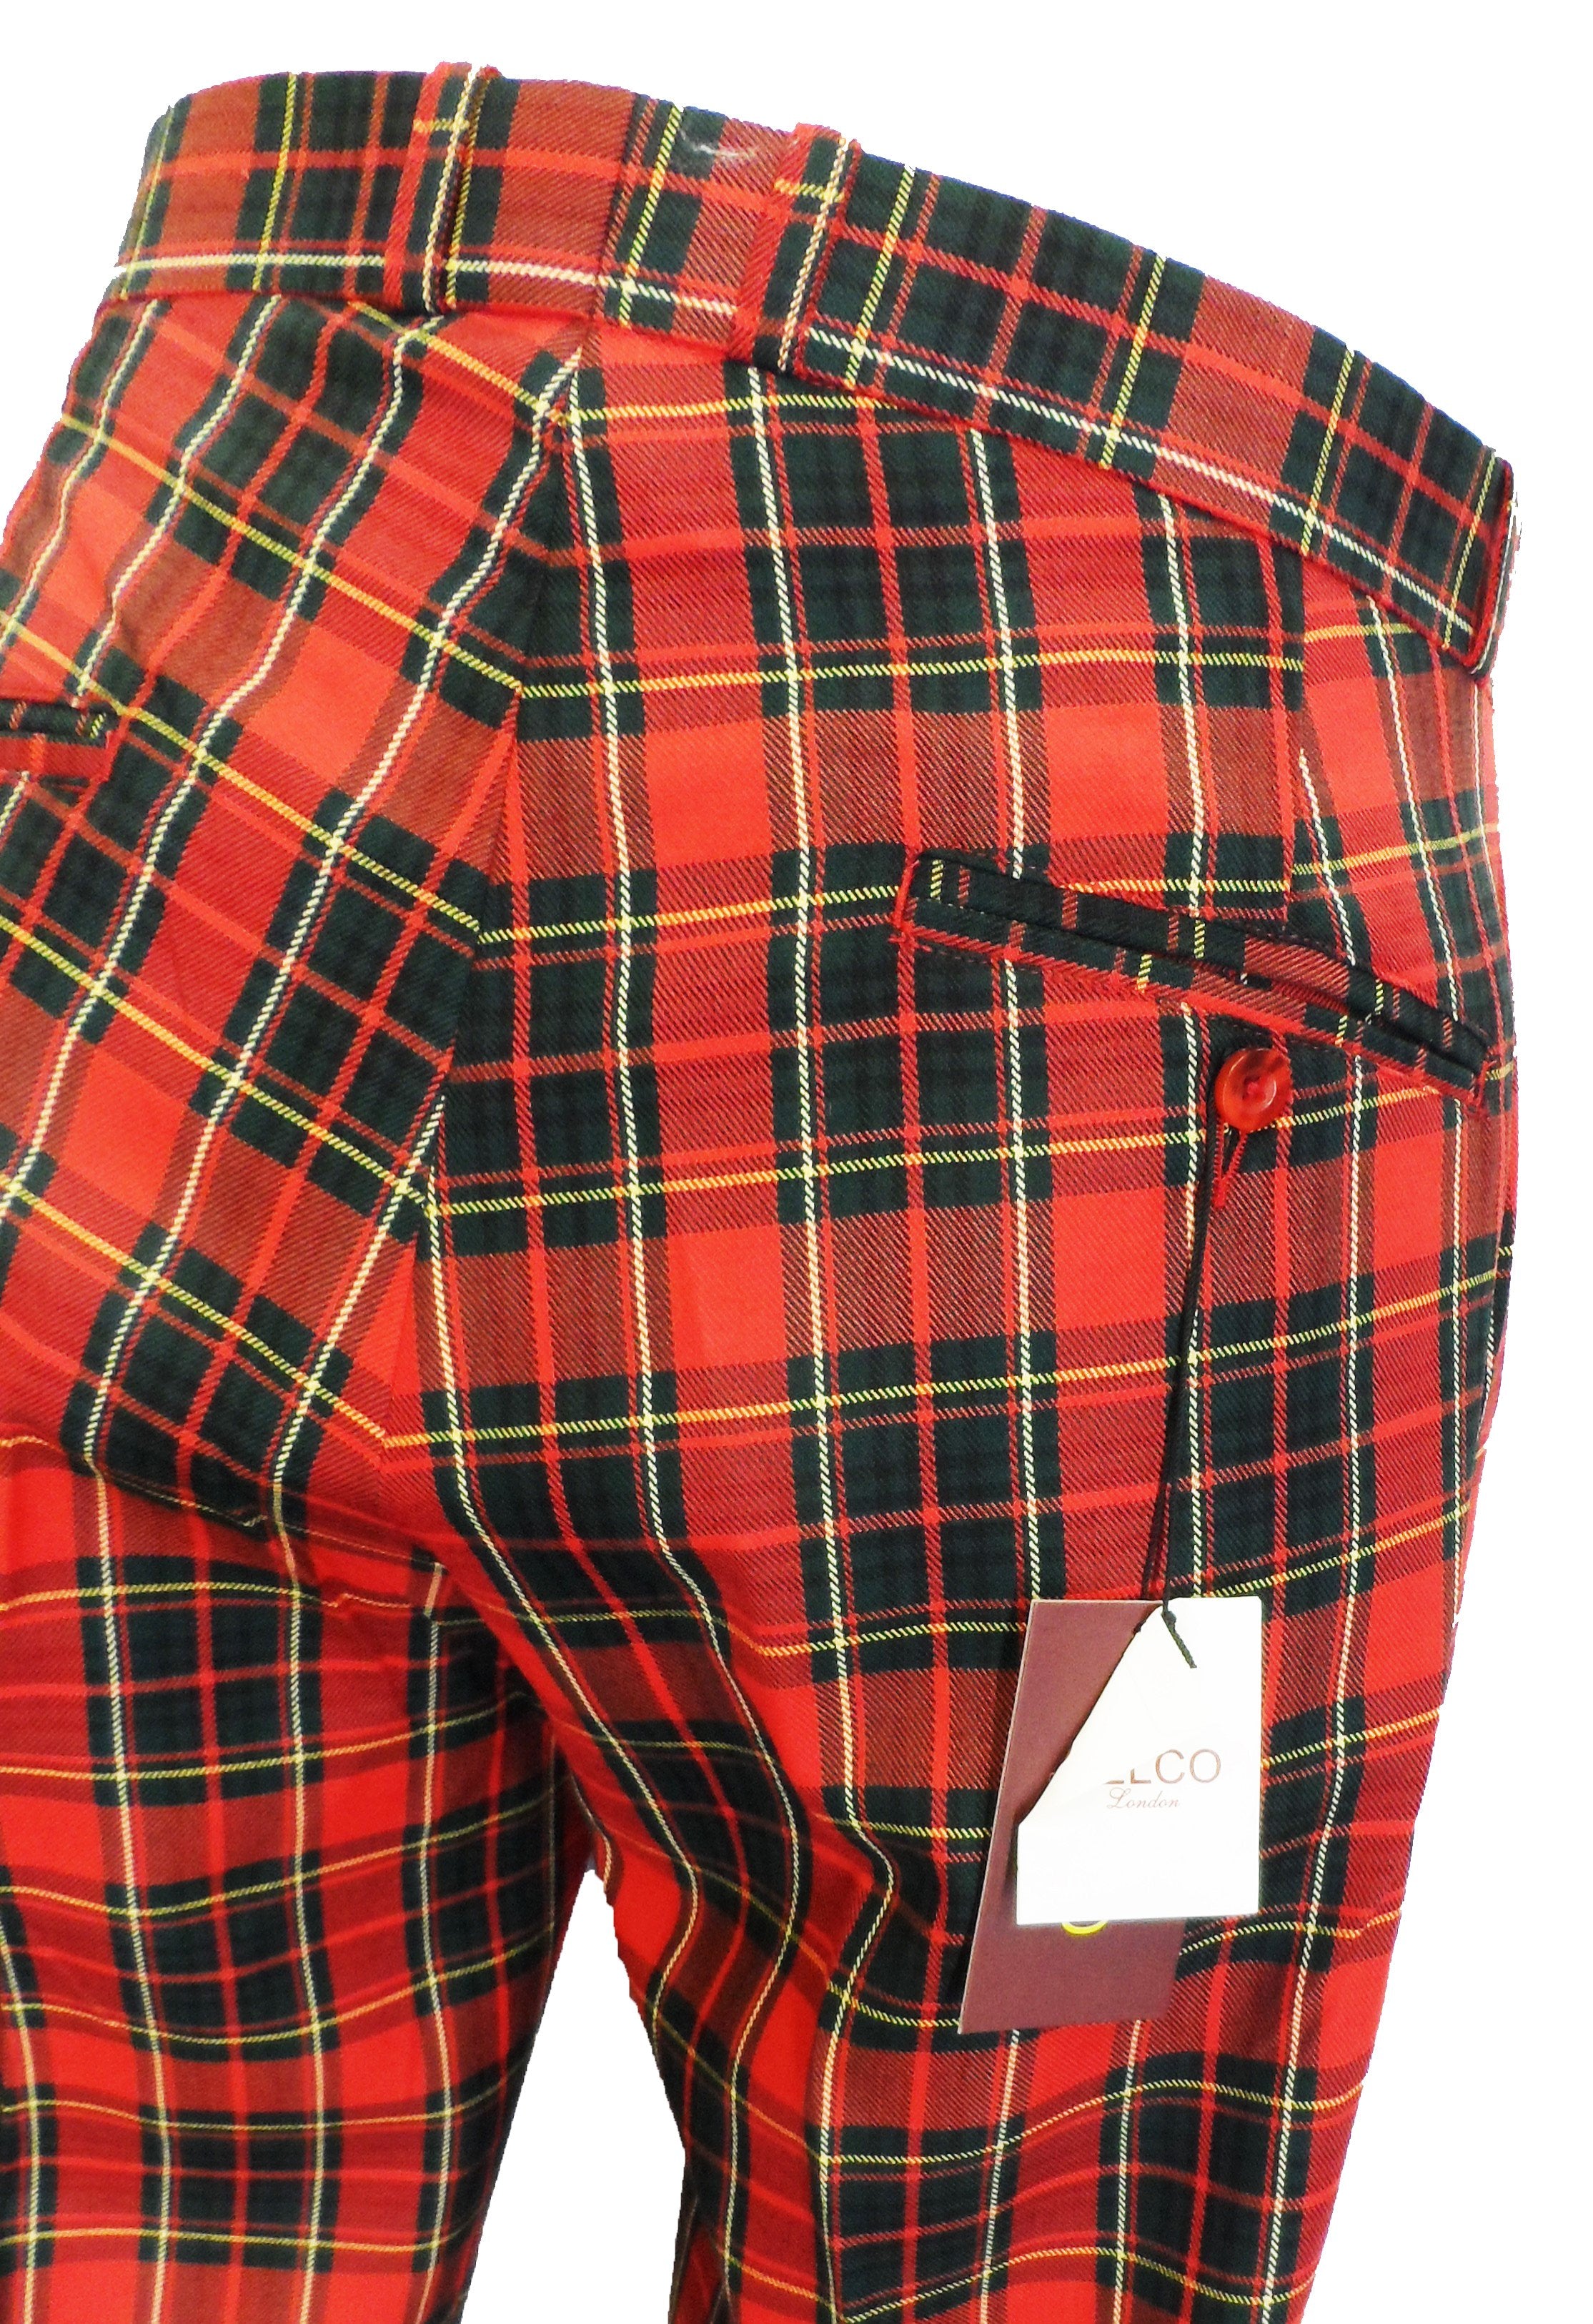 NWT Gucci Green/Red Tartan Check Wool Slim-Fit Trousers Size 46EU/30US  $1100.00 | eBay